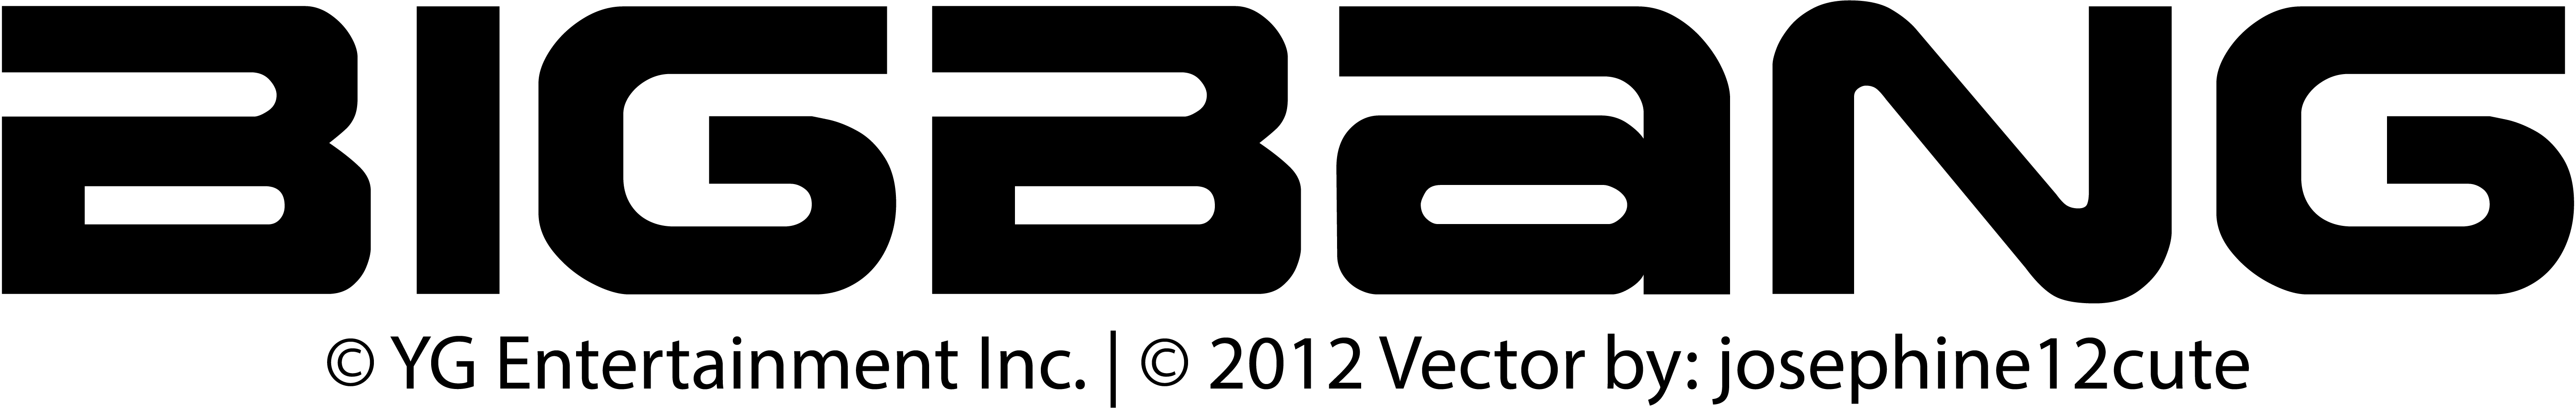 BigBang Logo by classicluv on DeviantArt